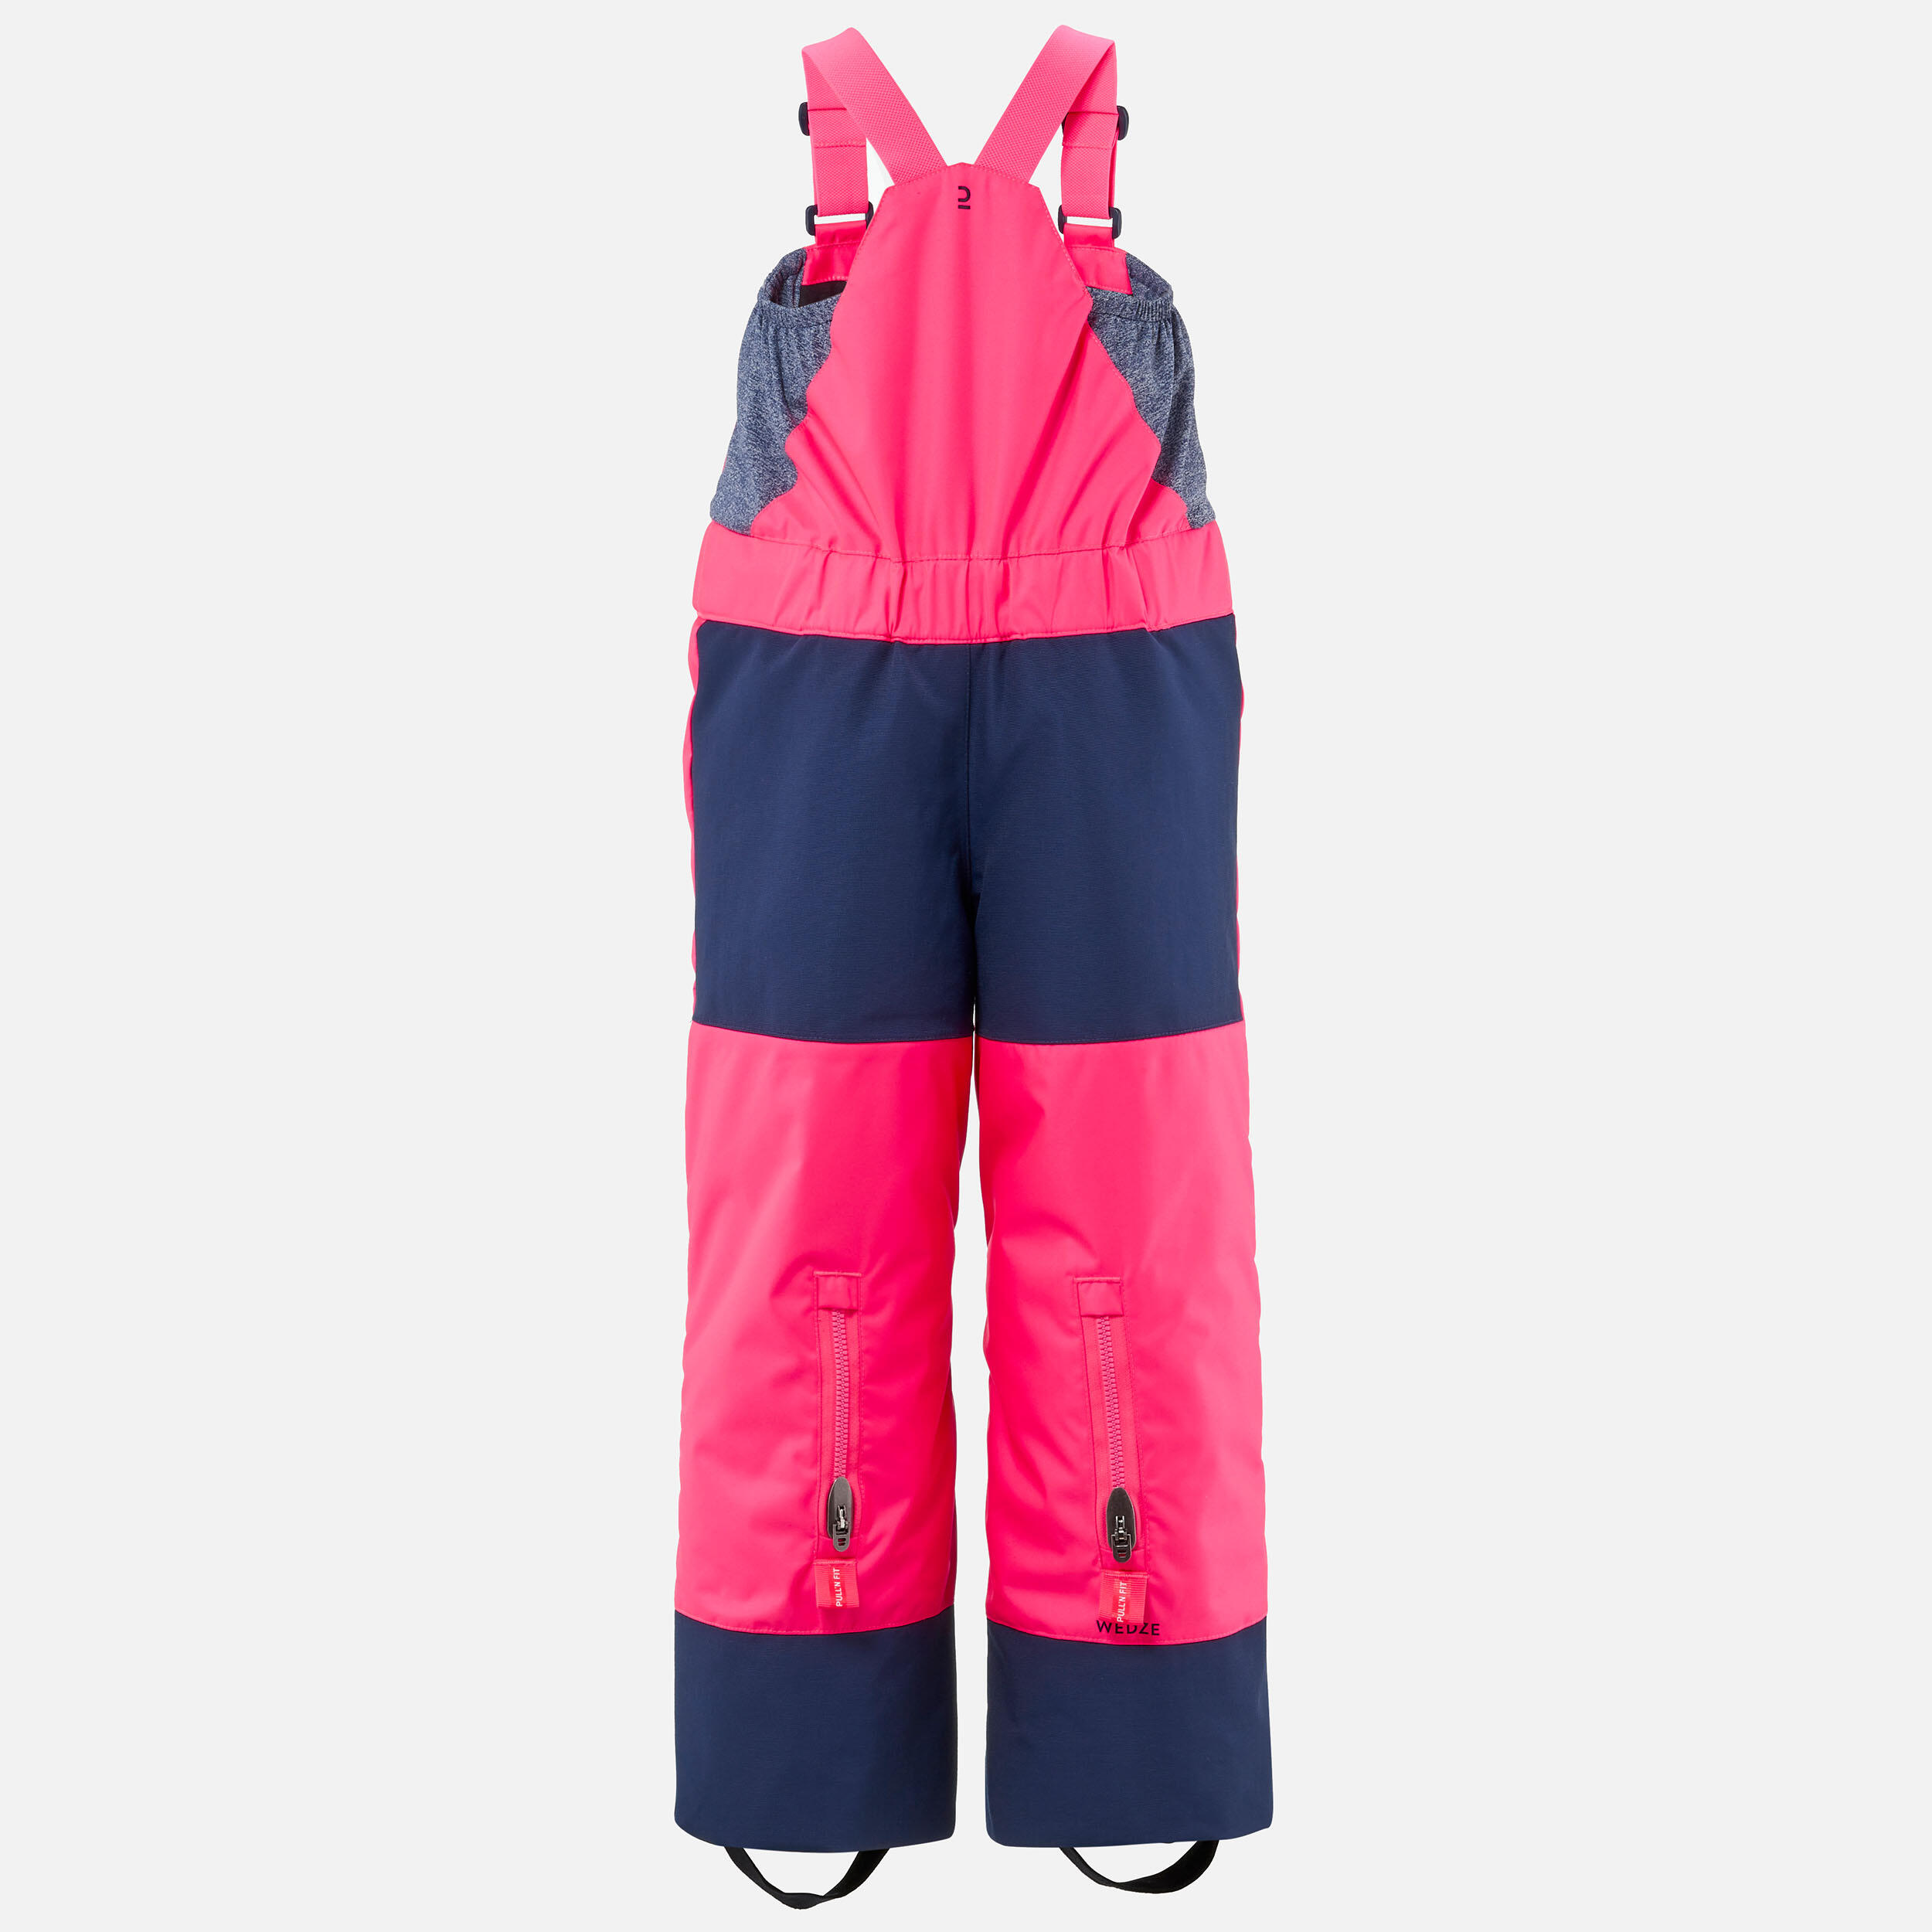 Kids' Winter Pants - Ski 500 Pink/Blue - Fluo crimson, Galaxy blue - Wedze  - Decathlon